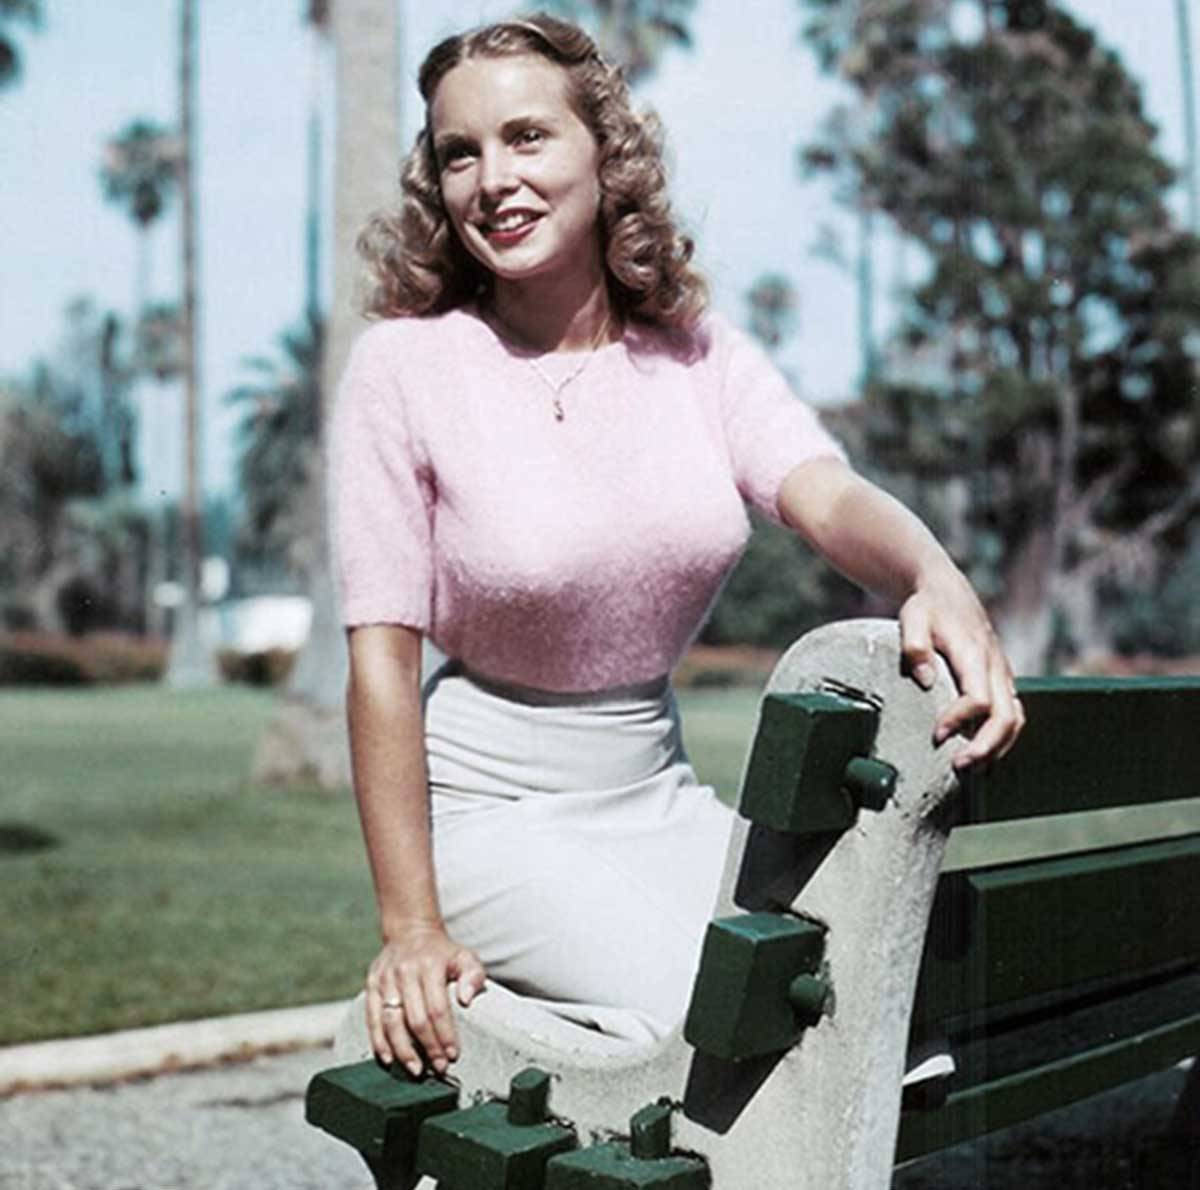 Neka on Tumblr: Sweater girl, actress Janet Leigh, 1945.